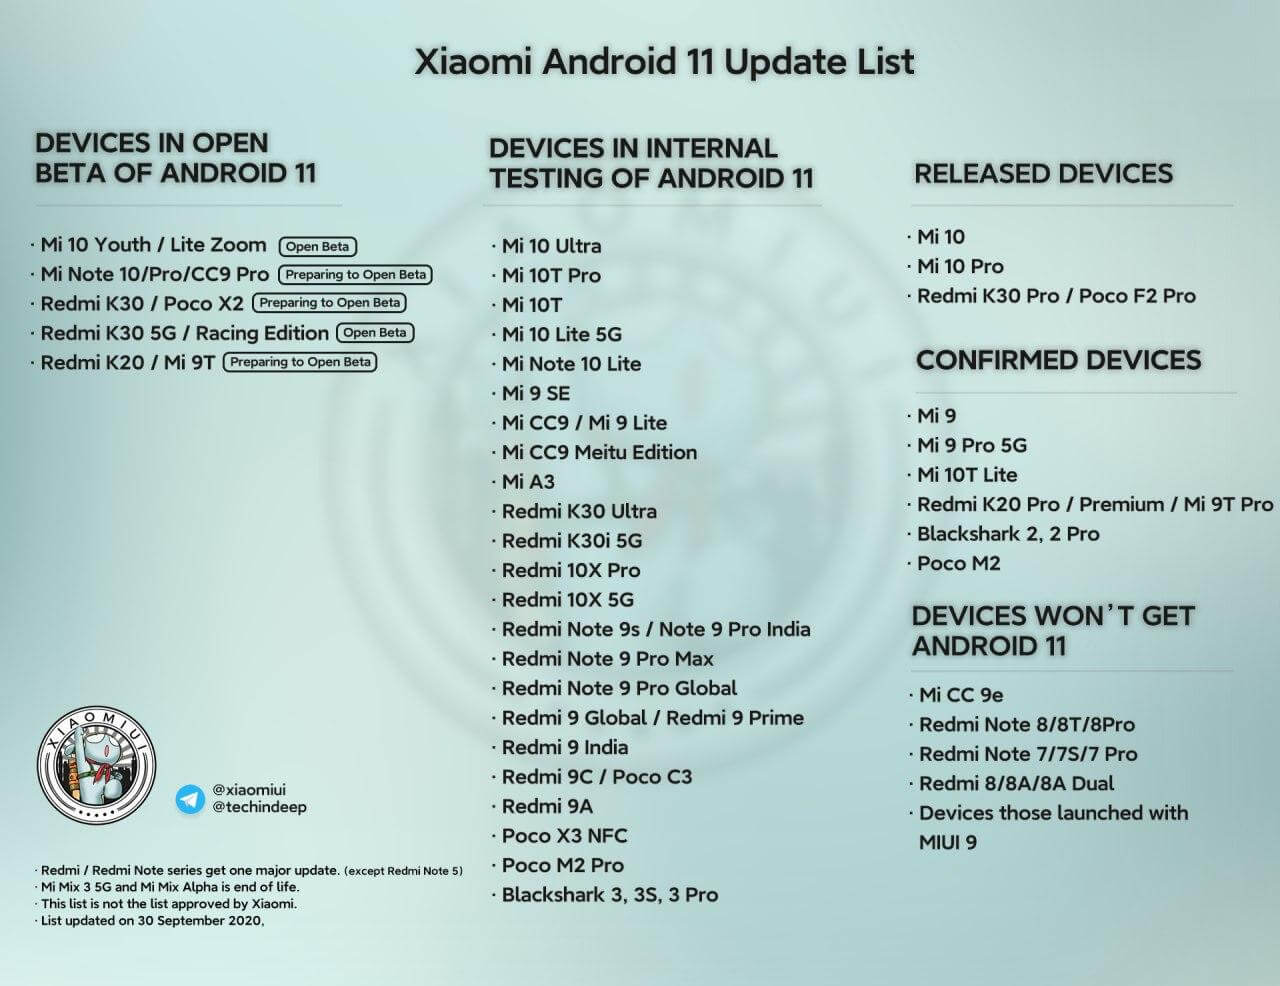 Android 11 internal beta testing